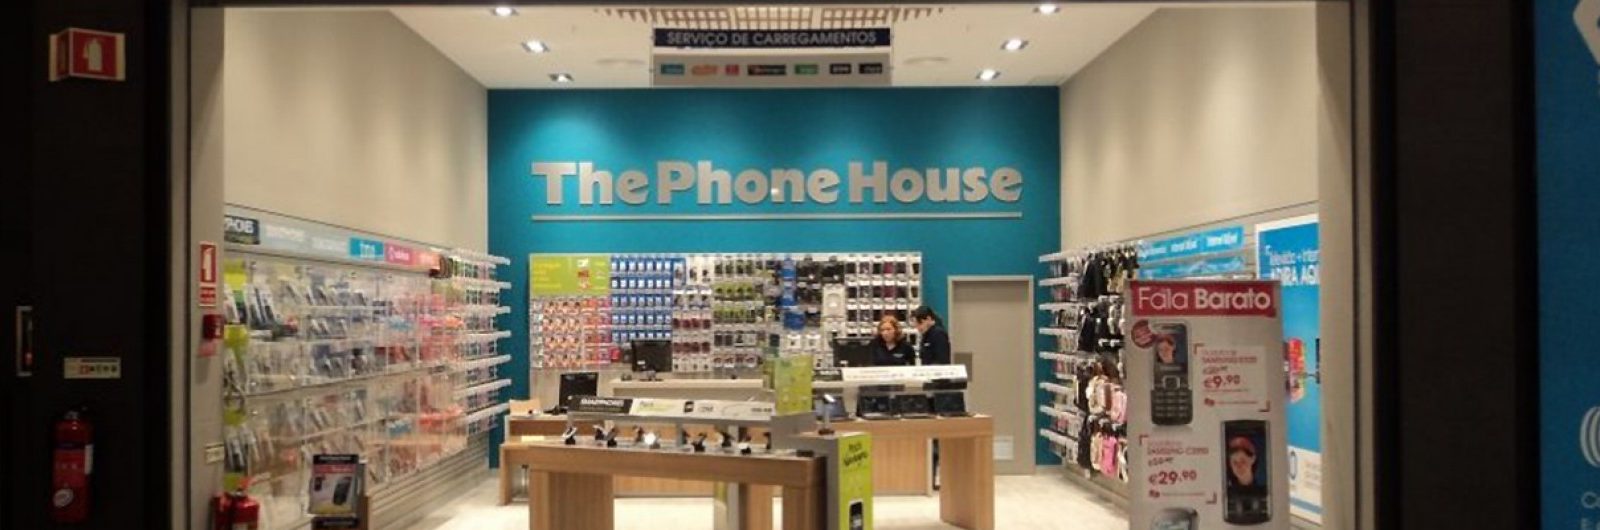 Phone House soma novas unidades